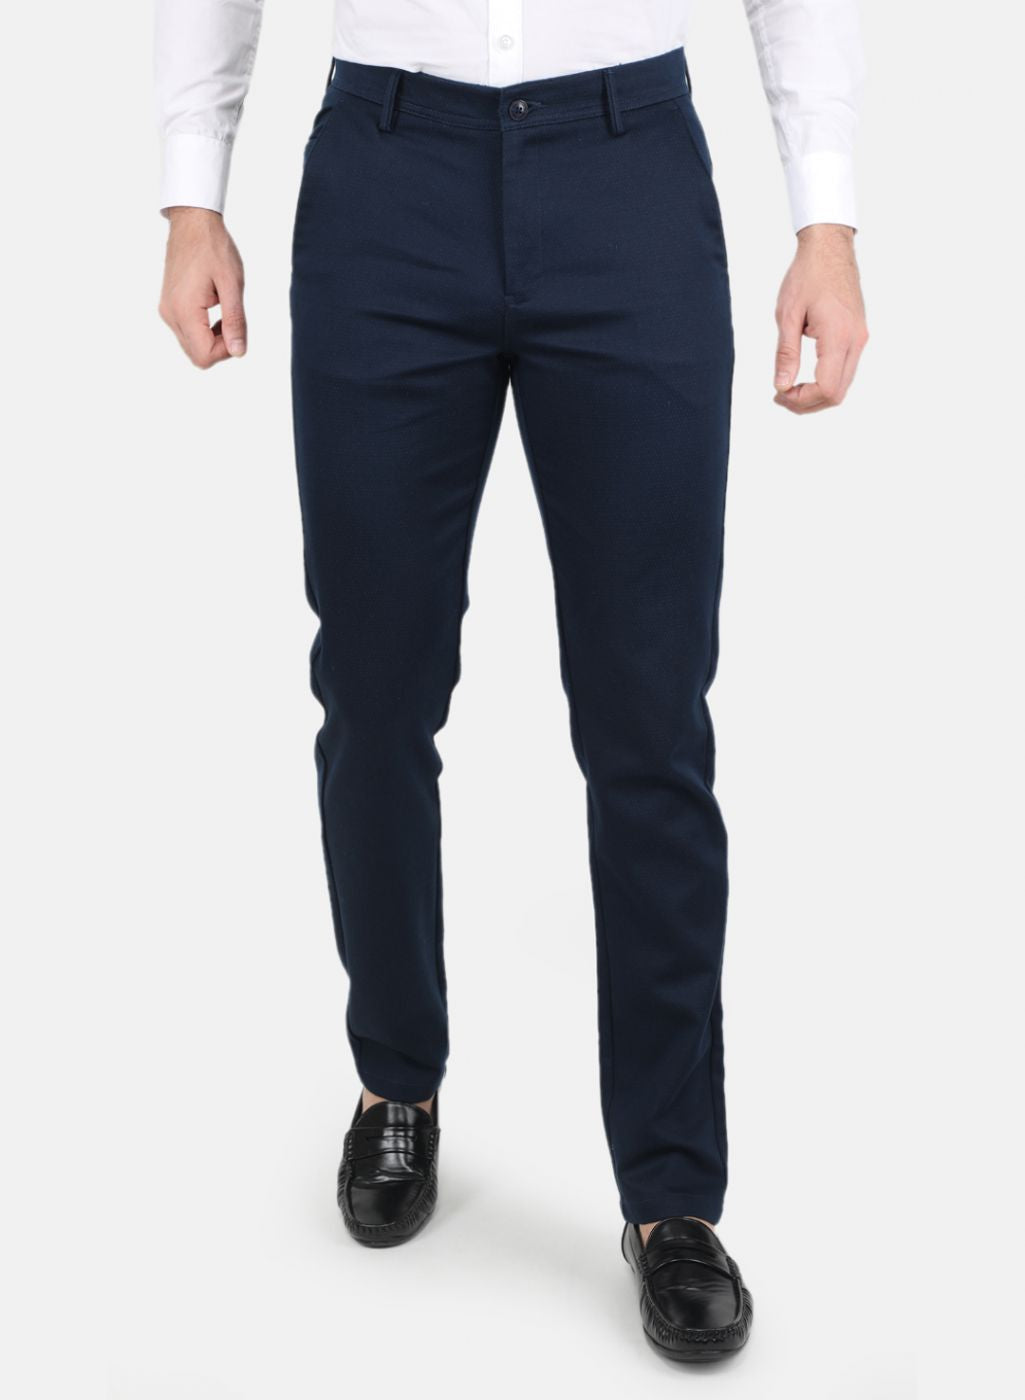 Buy Navy Blue Formal Trouser For Men Online @ Best Prices in India